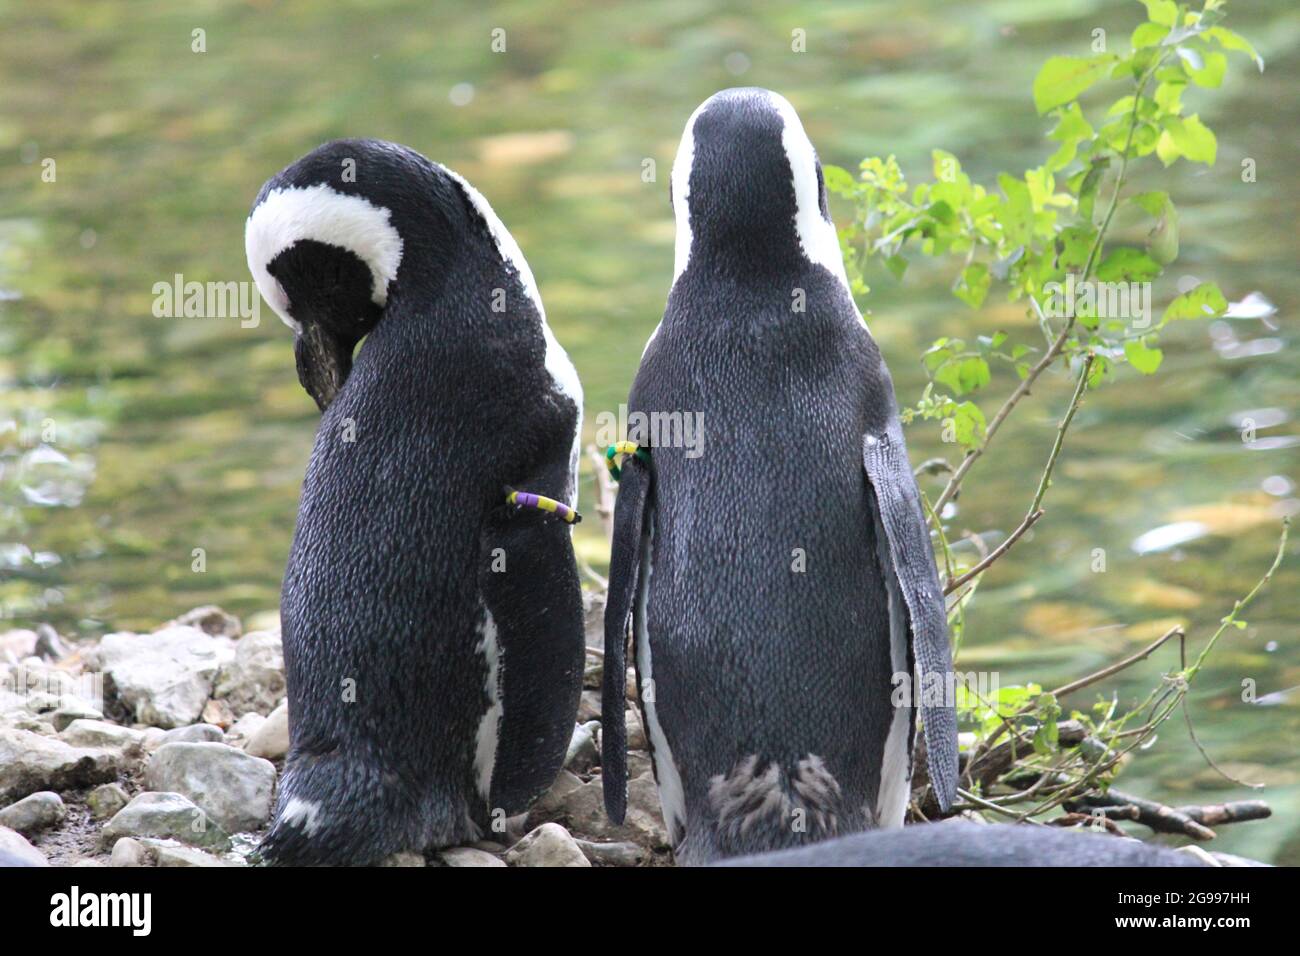 African penguin in Overloon zoo in the Netherlands Stock Photo